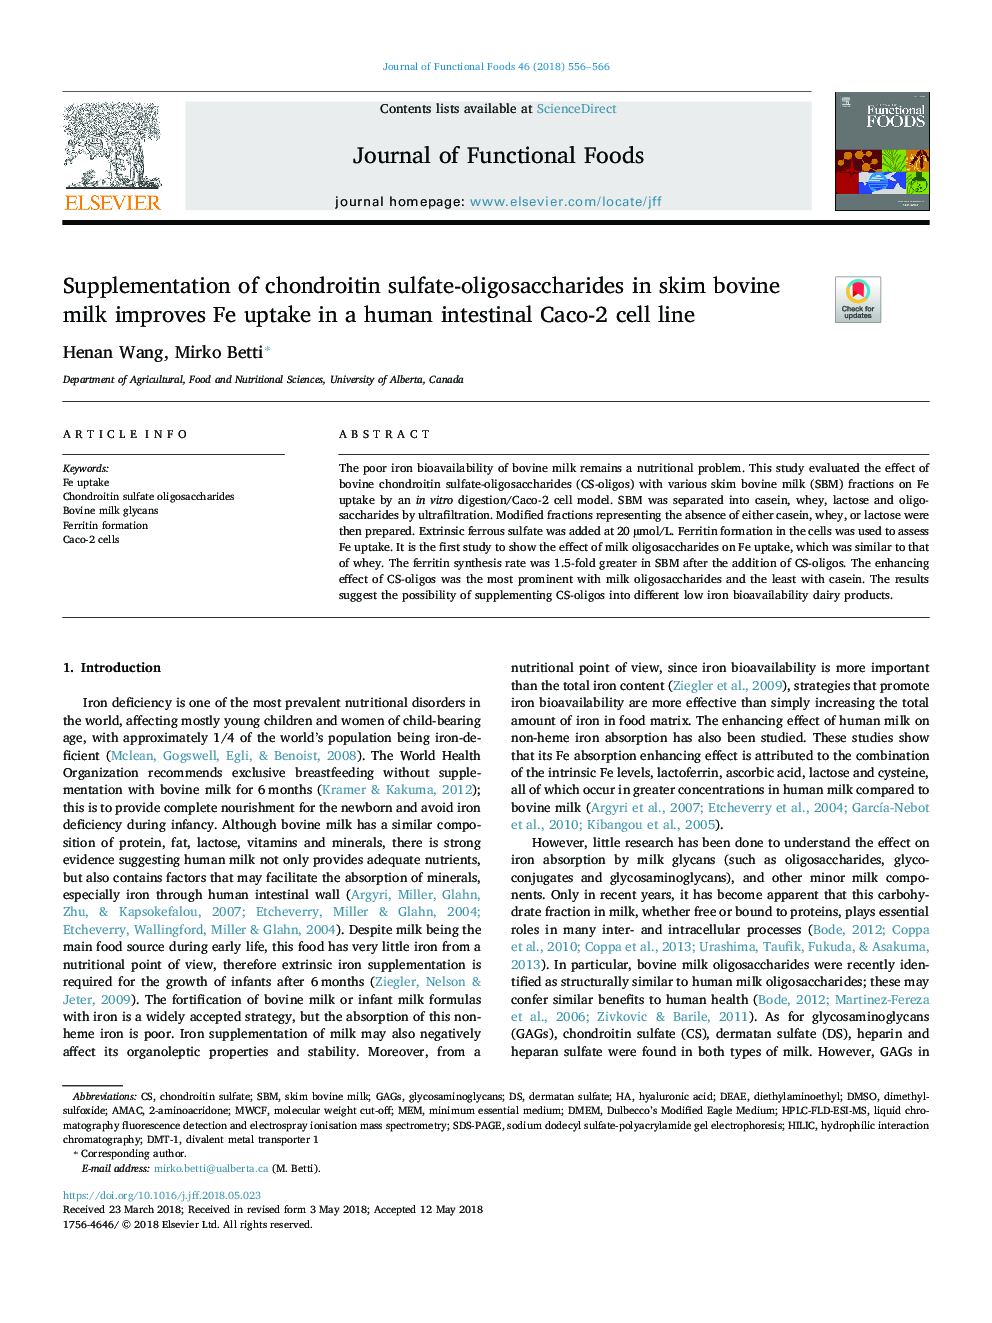 Supplementation of chondroitin sulfate-oligosaccharides in skim bovine milk improves Fe uptake in a human intestinal Caco-2 cell line